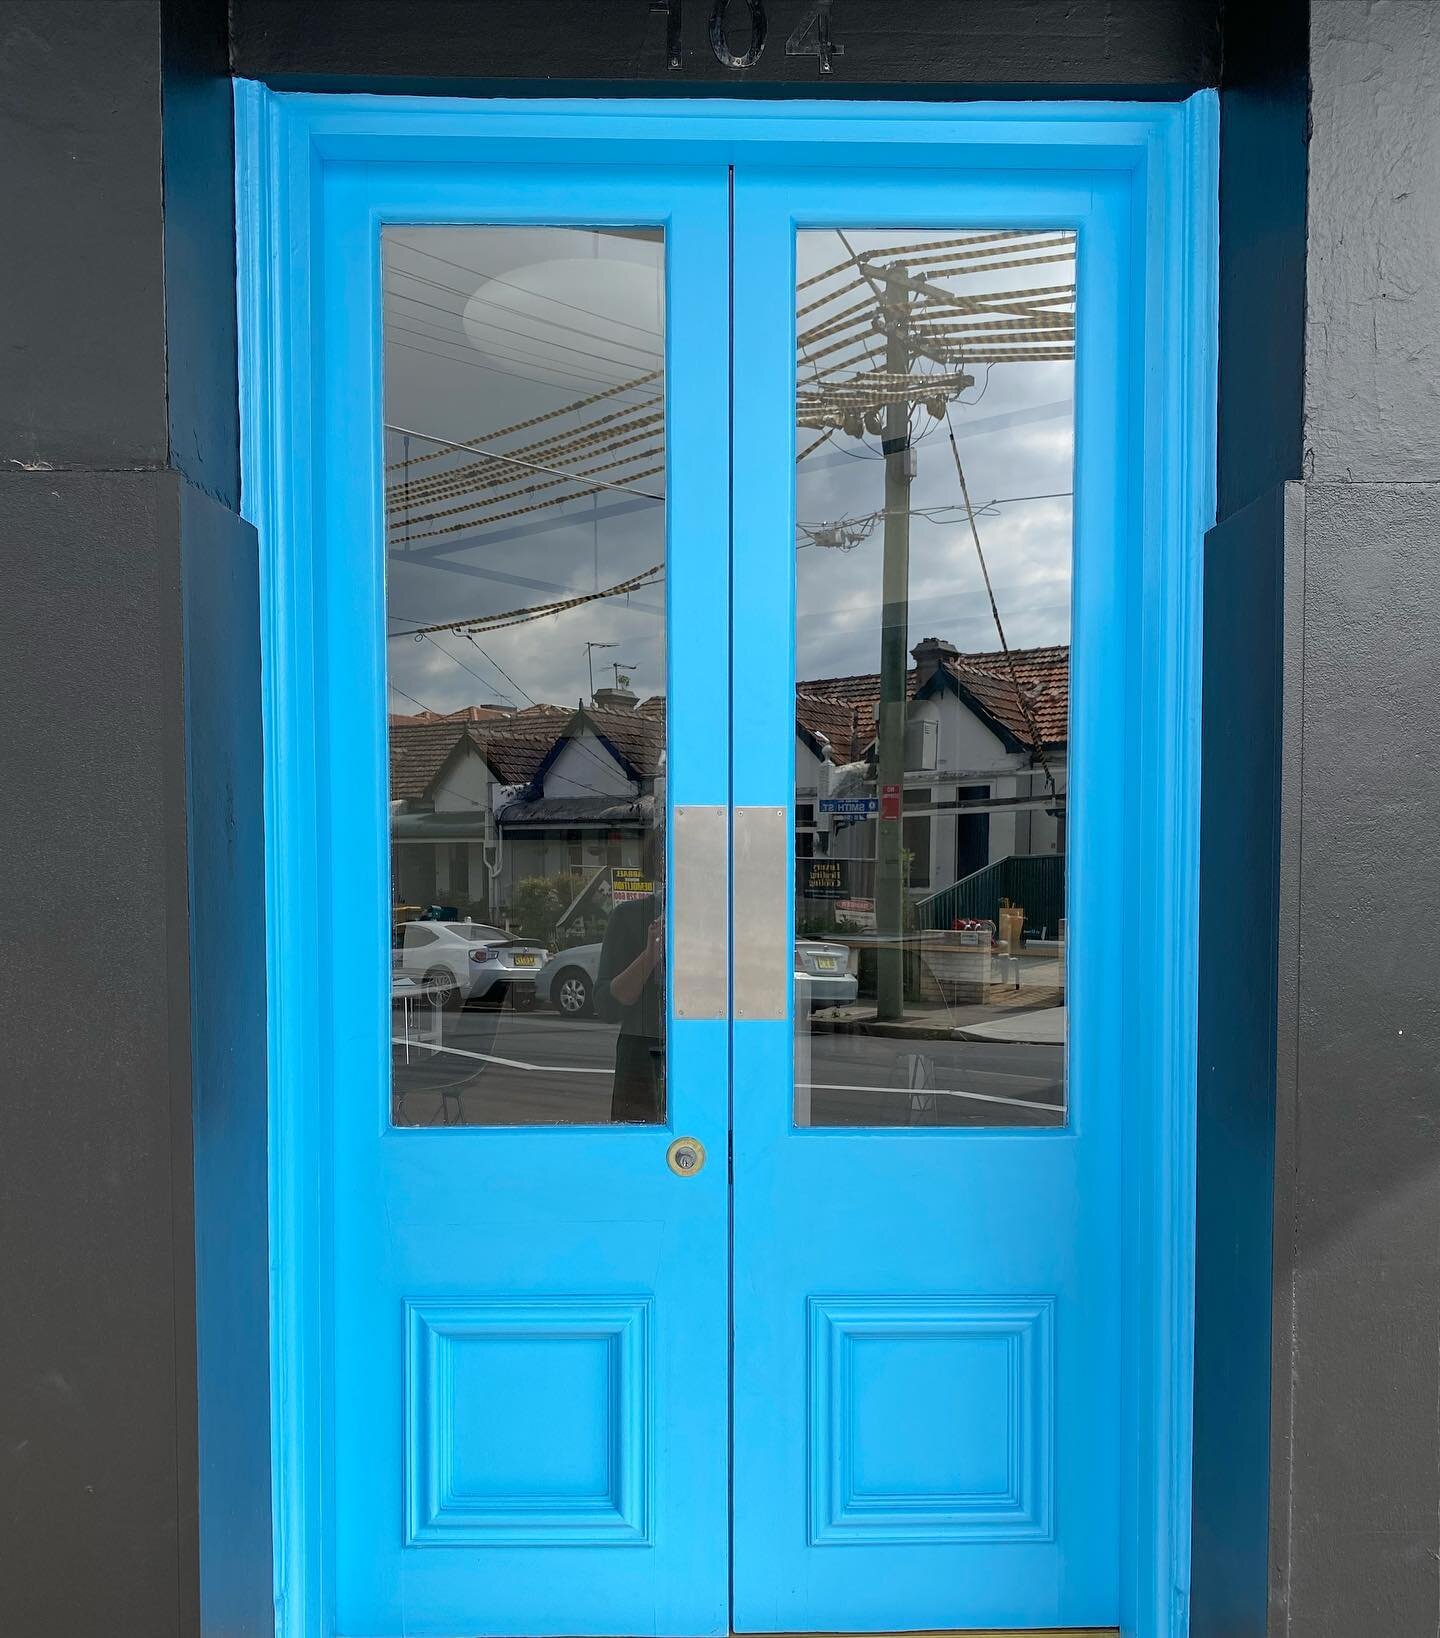 New colour crush 👌🏻
#bluedoor